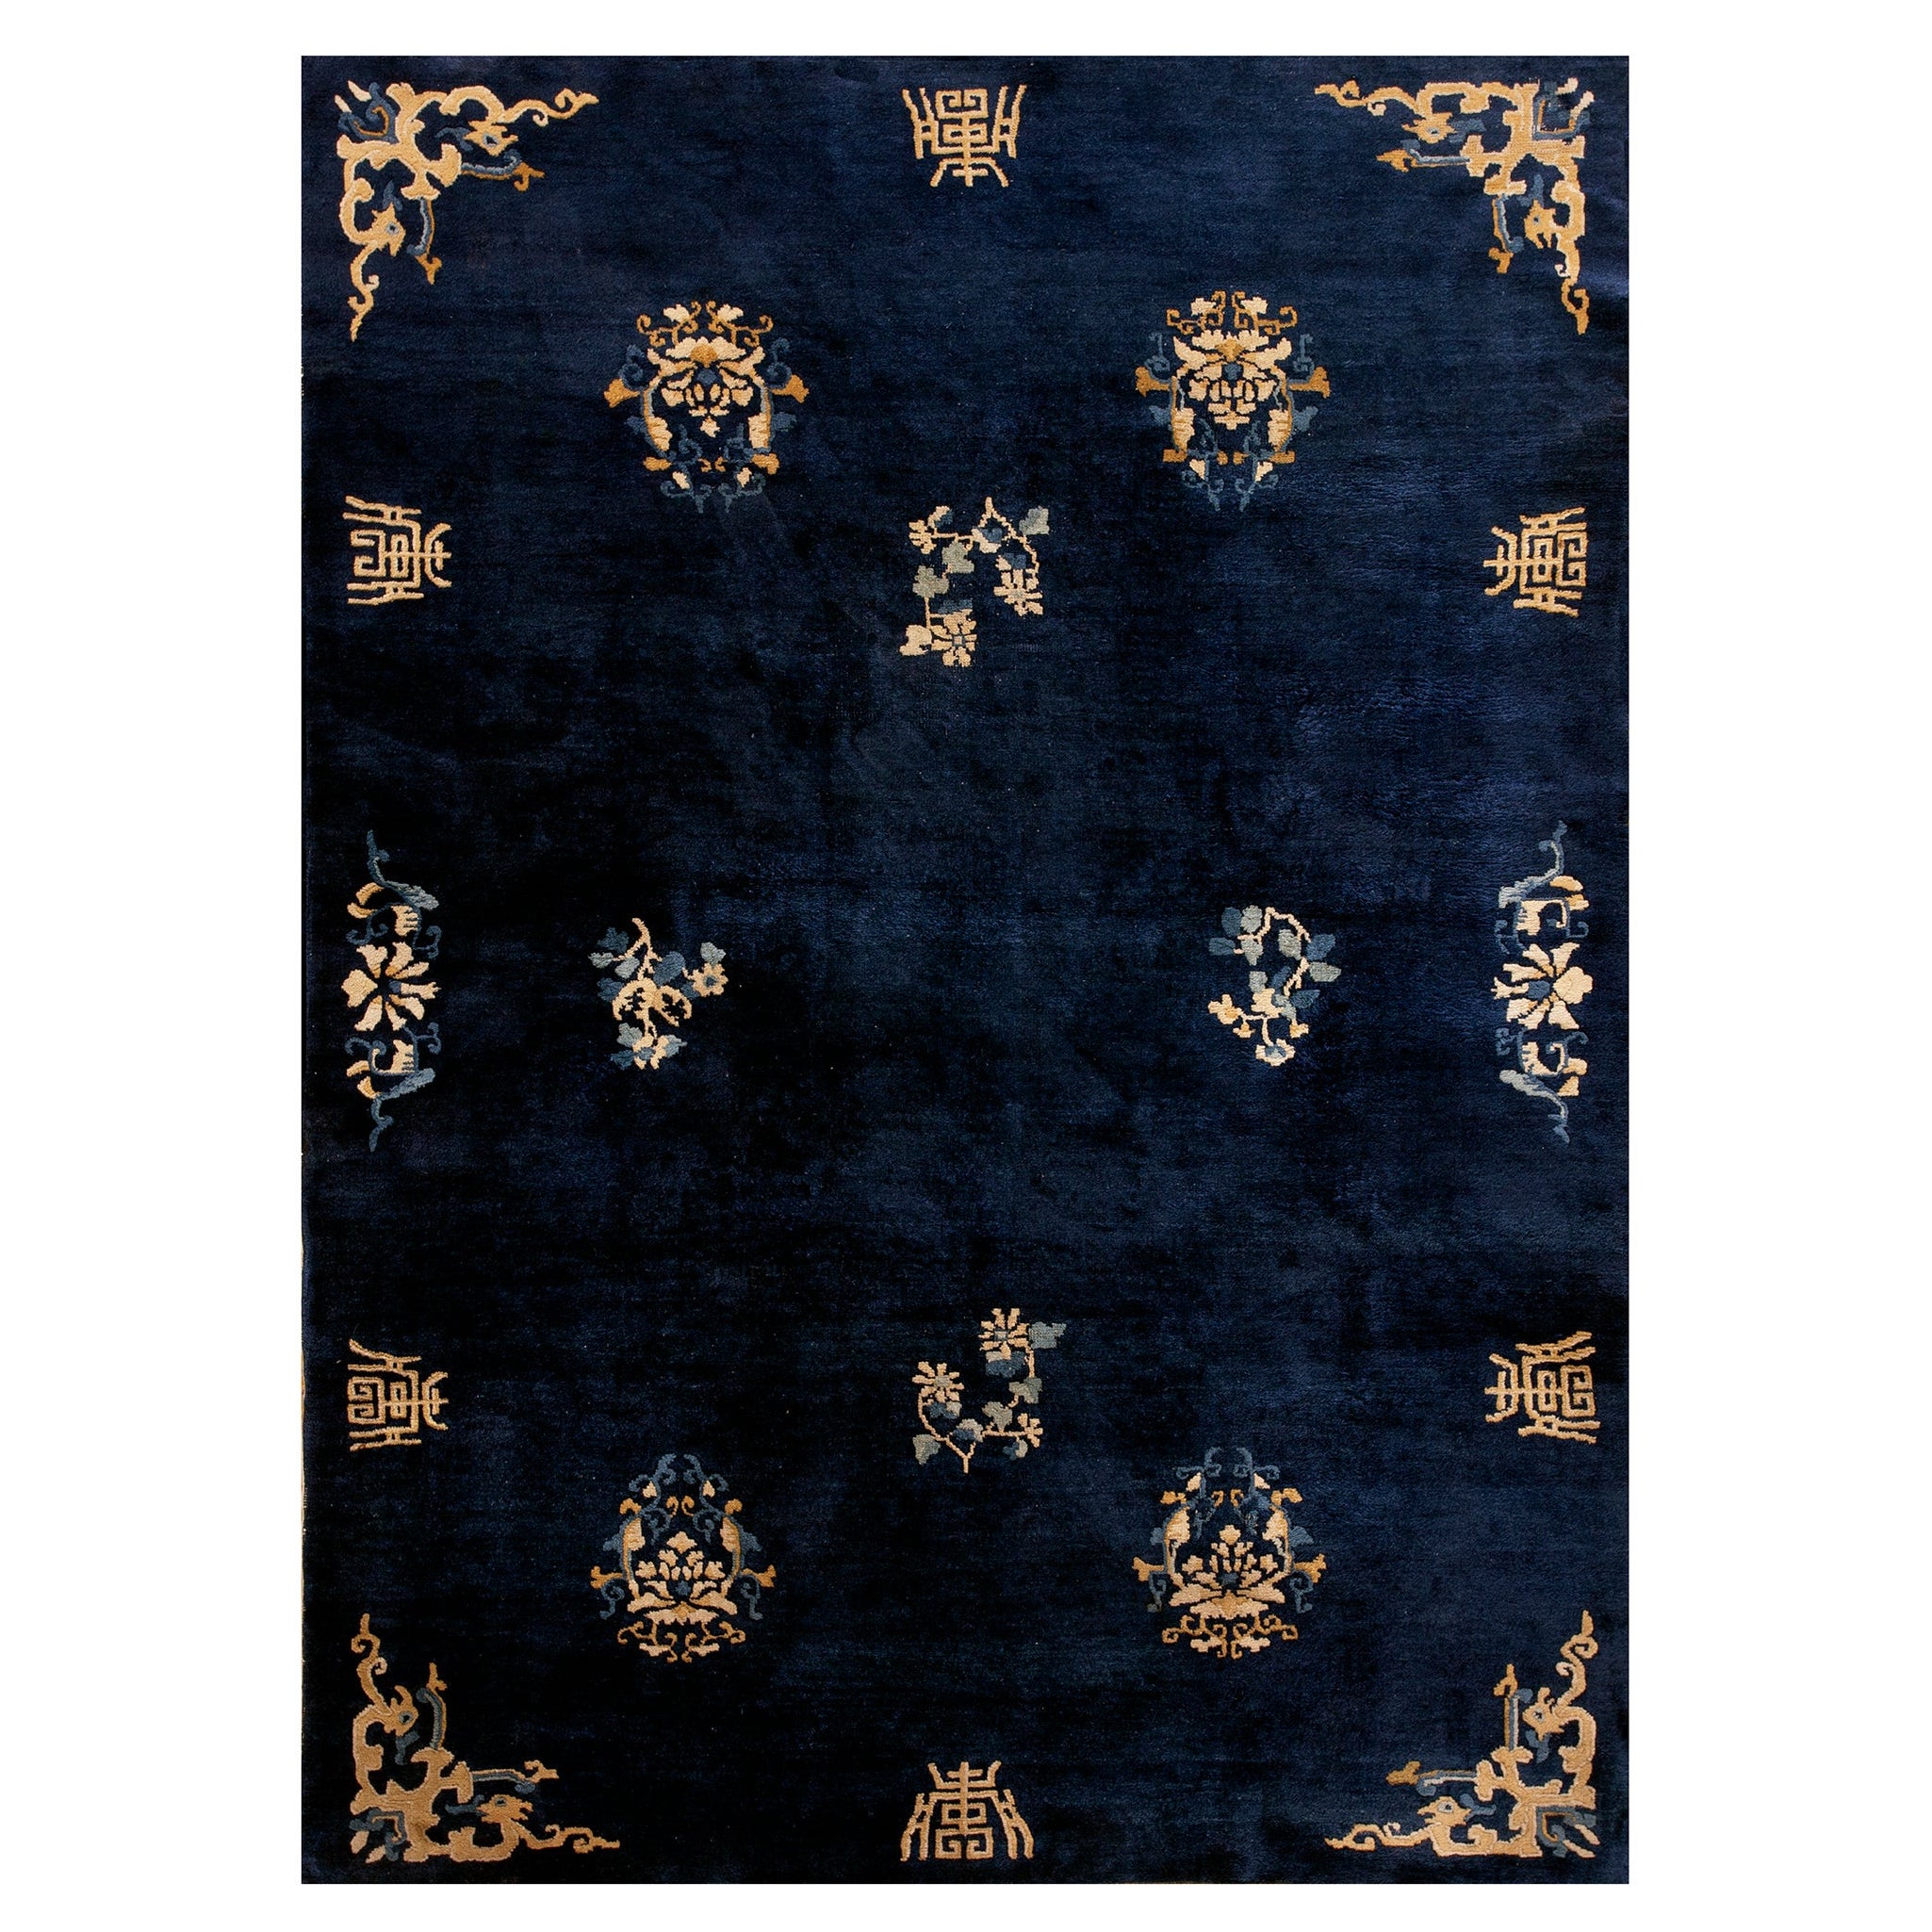 Early 20th Century Chinese Peking Carpet ( 6'3" x 8'6" - 191 x 259 )